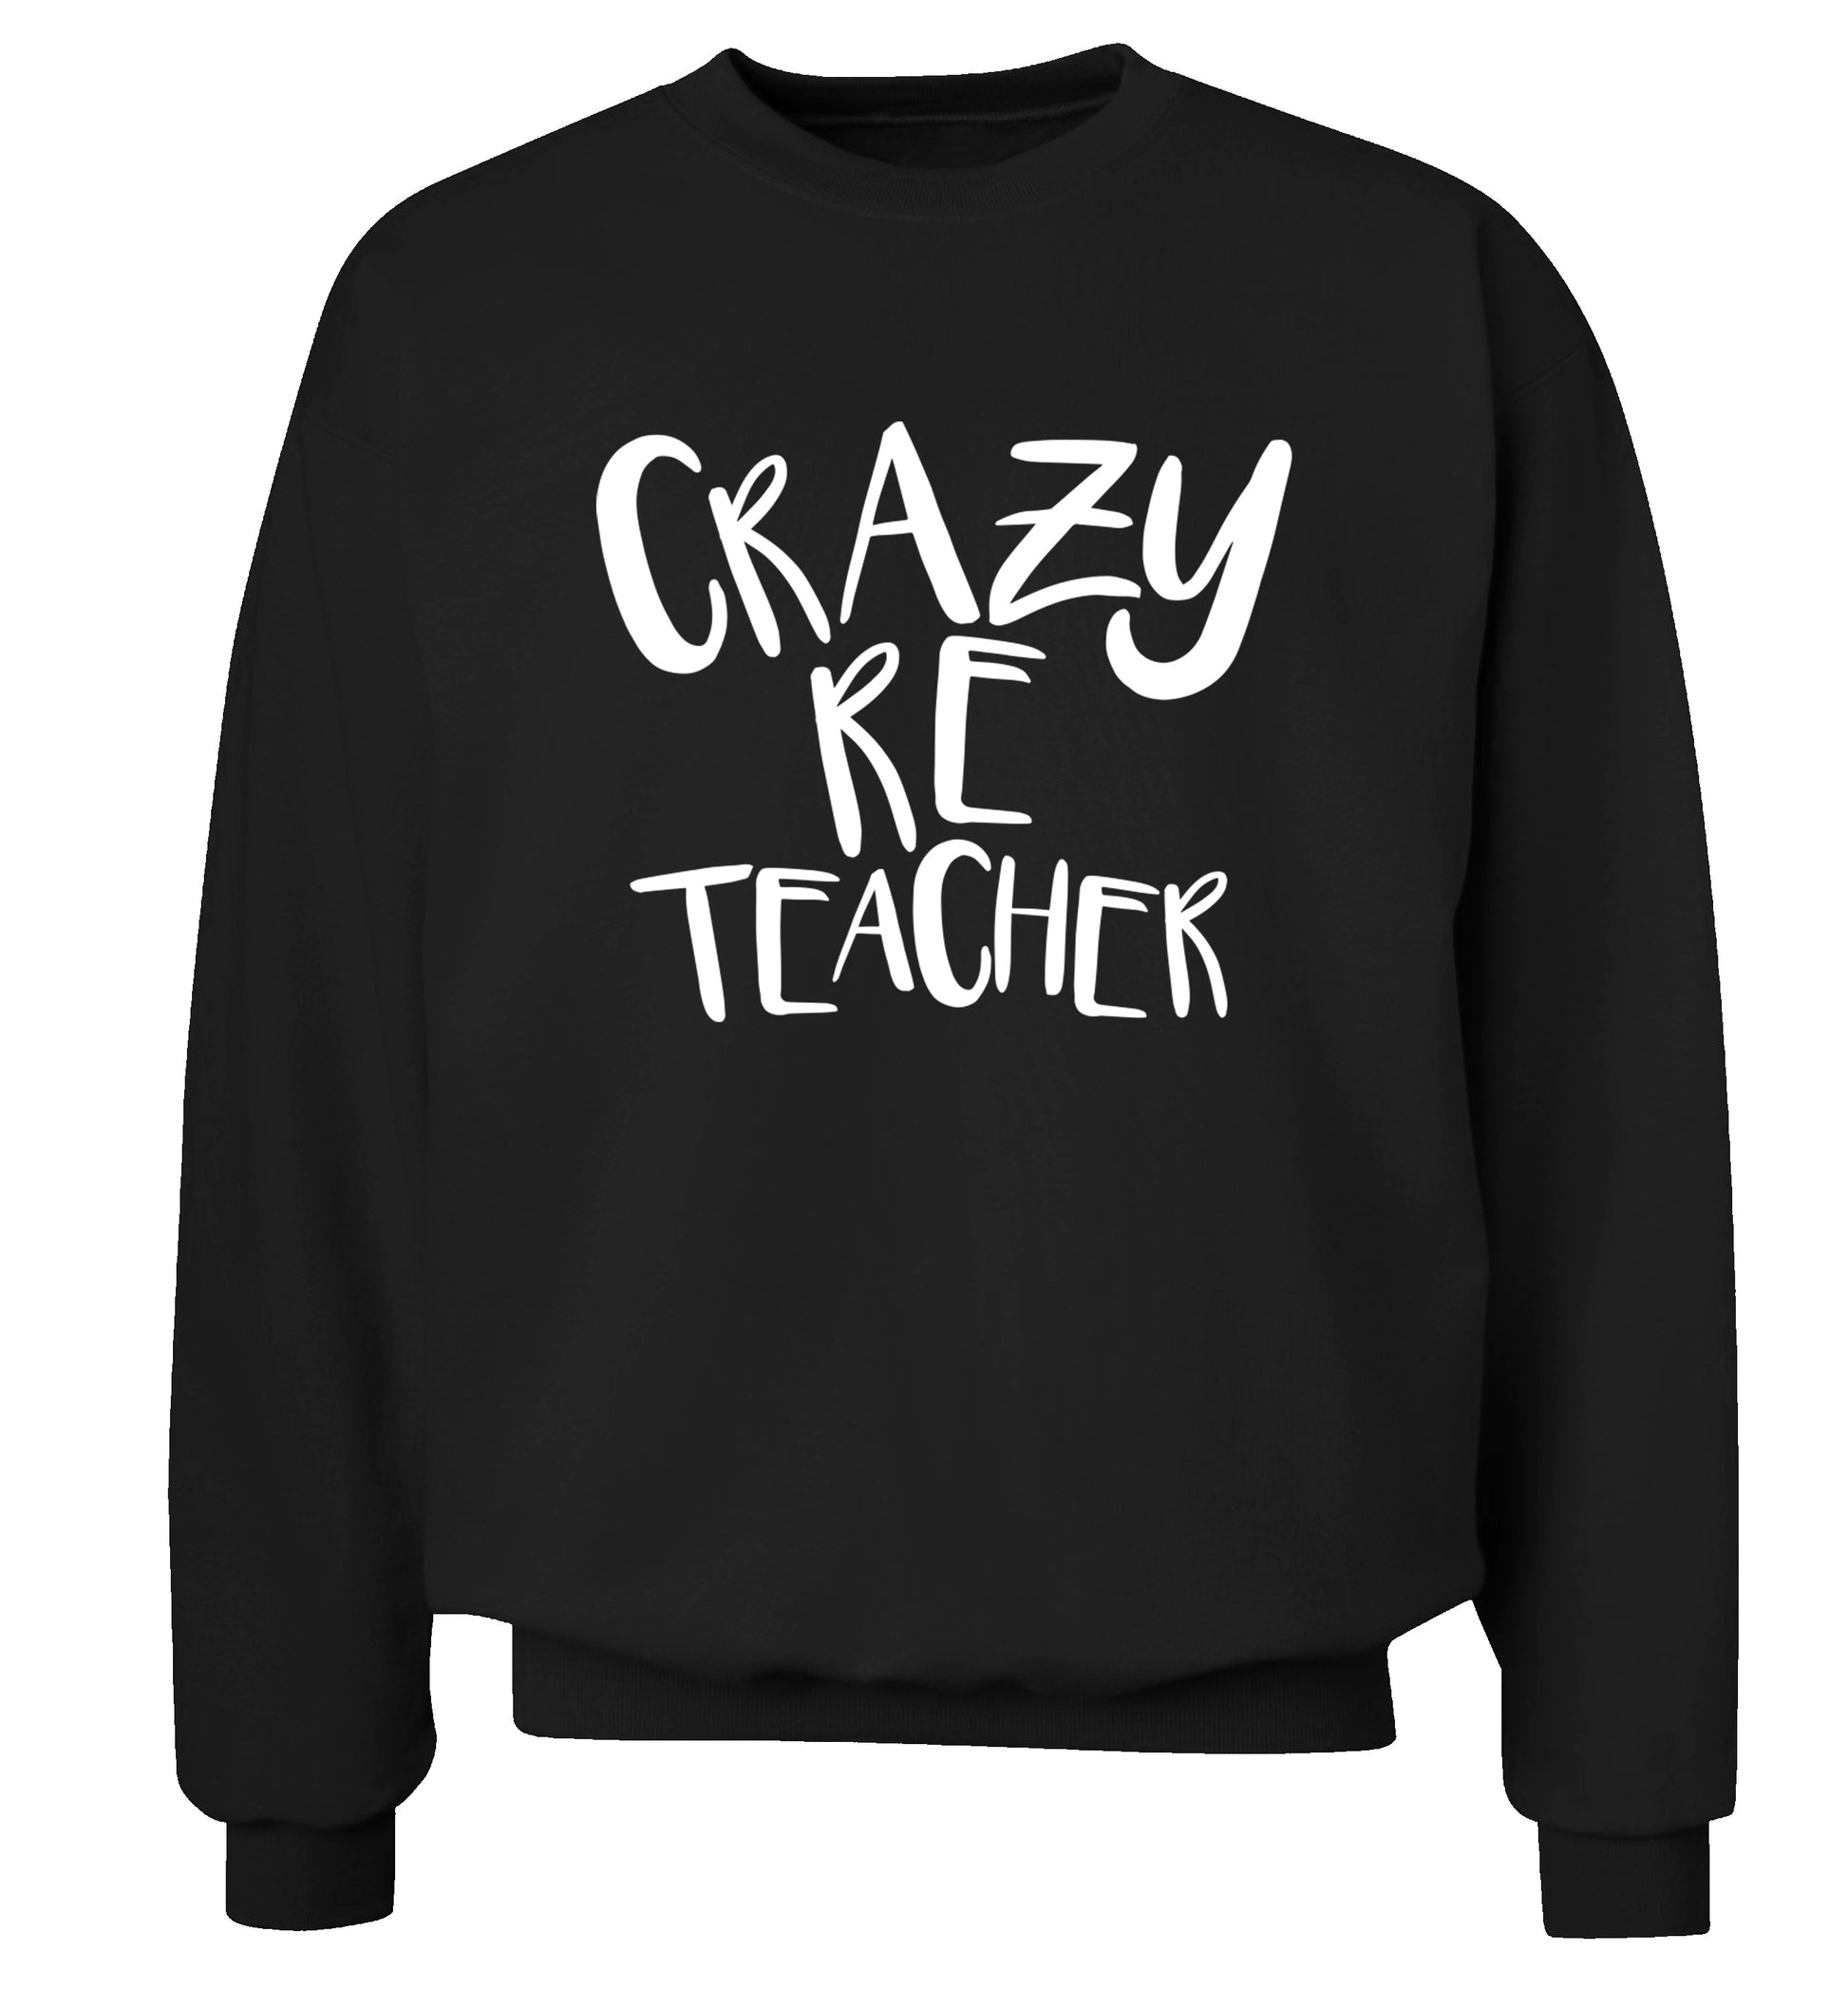 Crazy RE teacher Adult's unisex black Sweater 2XL